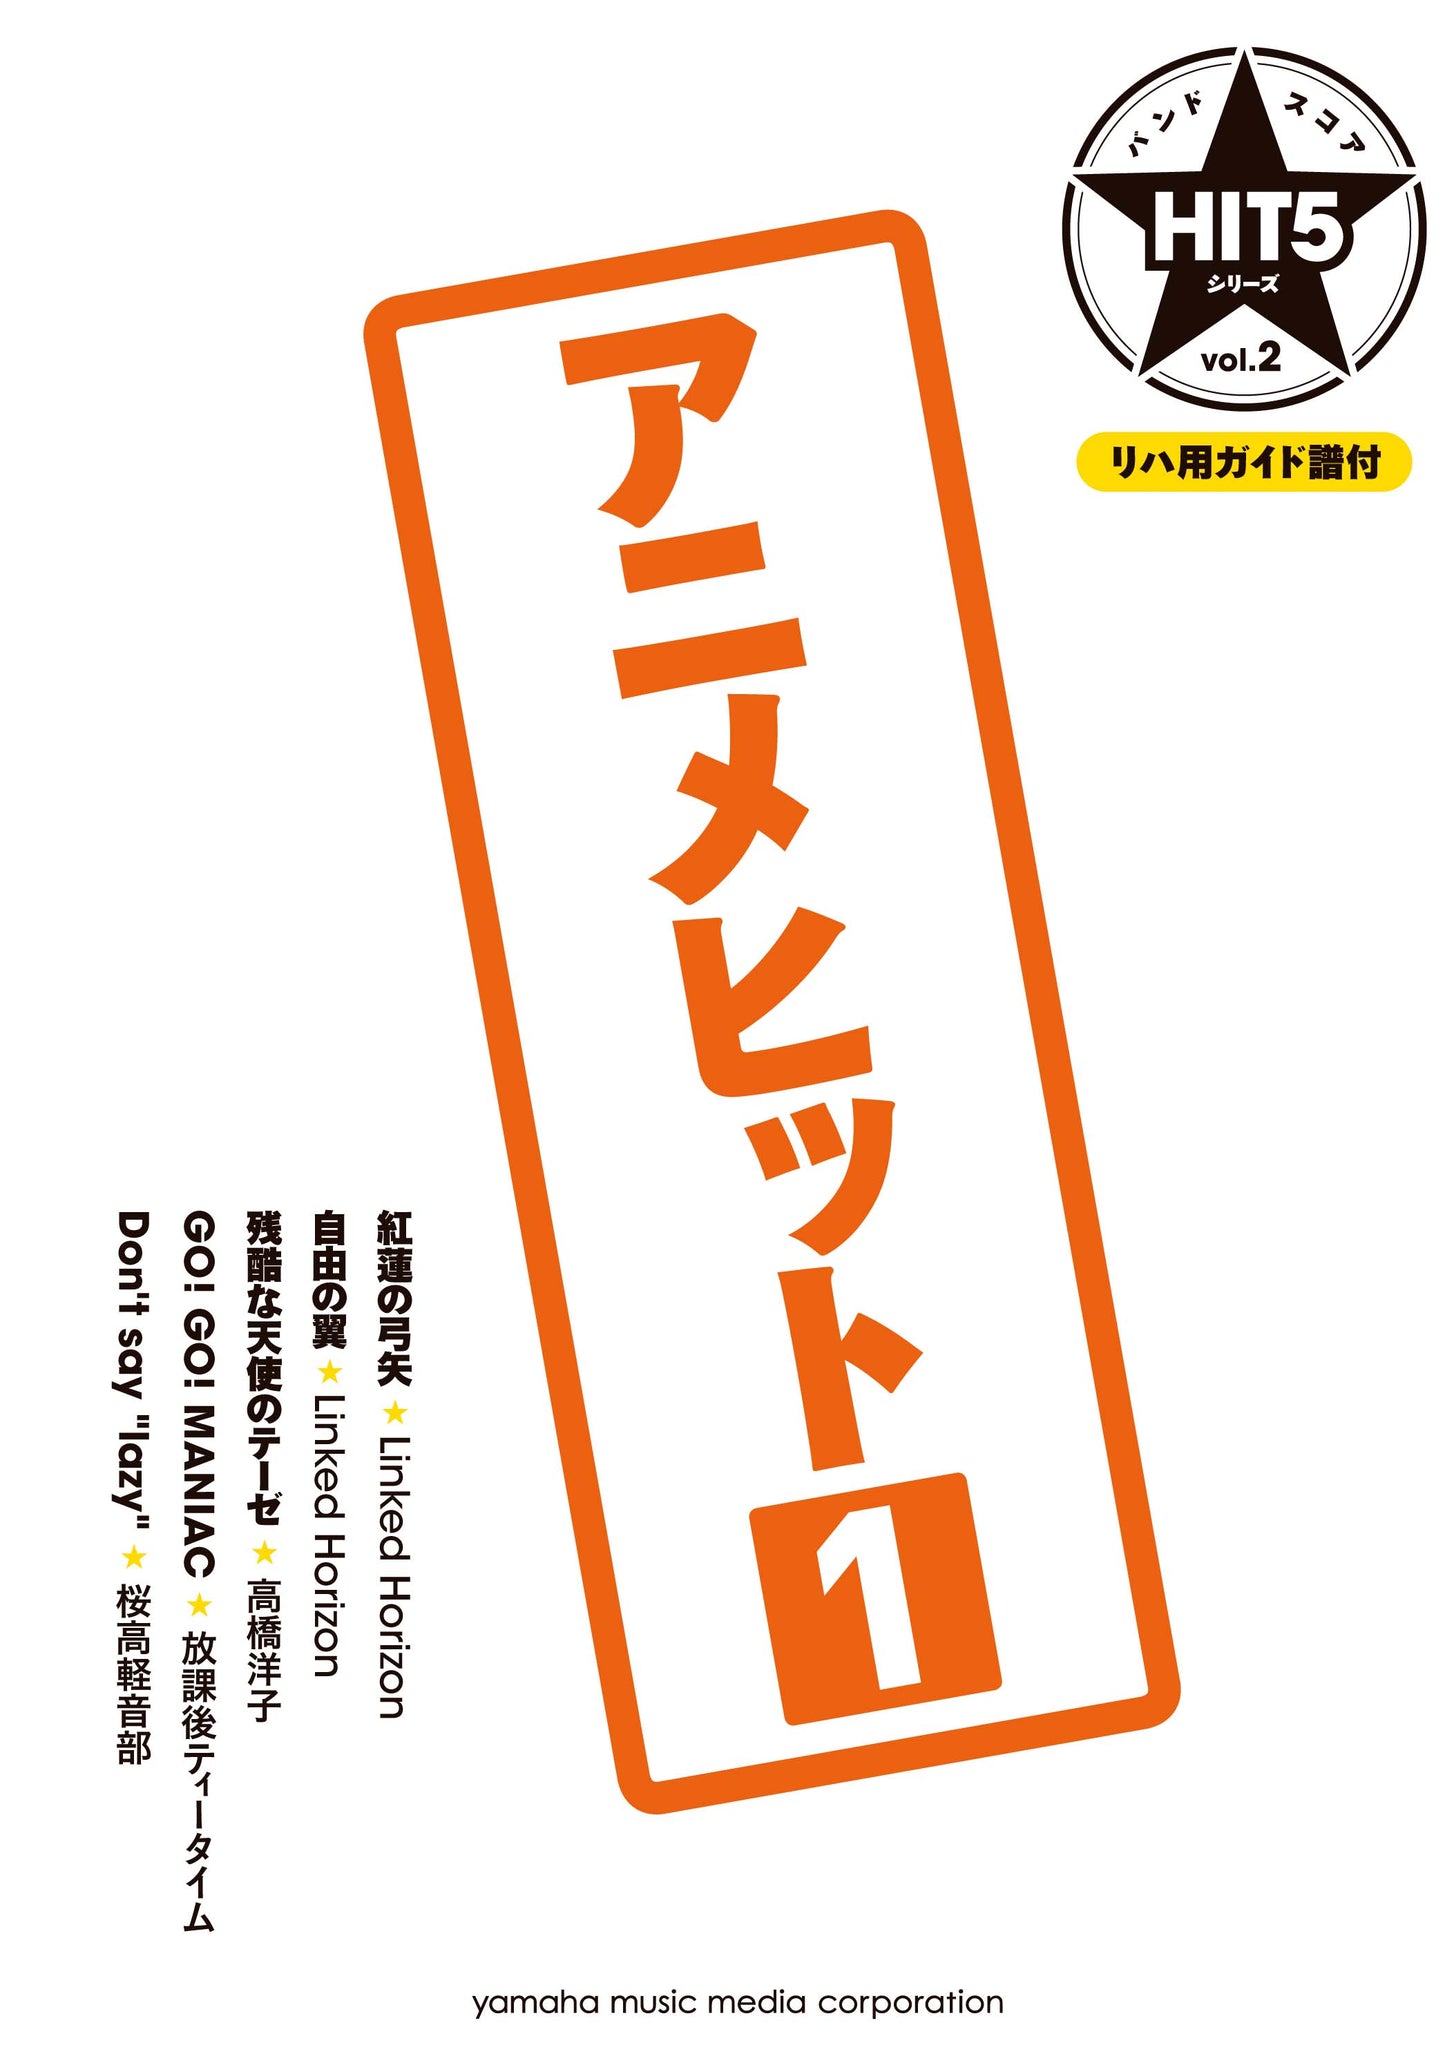 Rock Band Score; HIT5 Series Vol.2 Anime Hits Solo Sheet Music Book